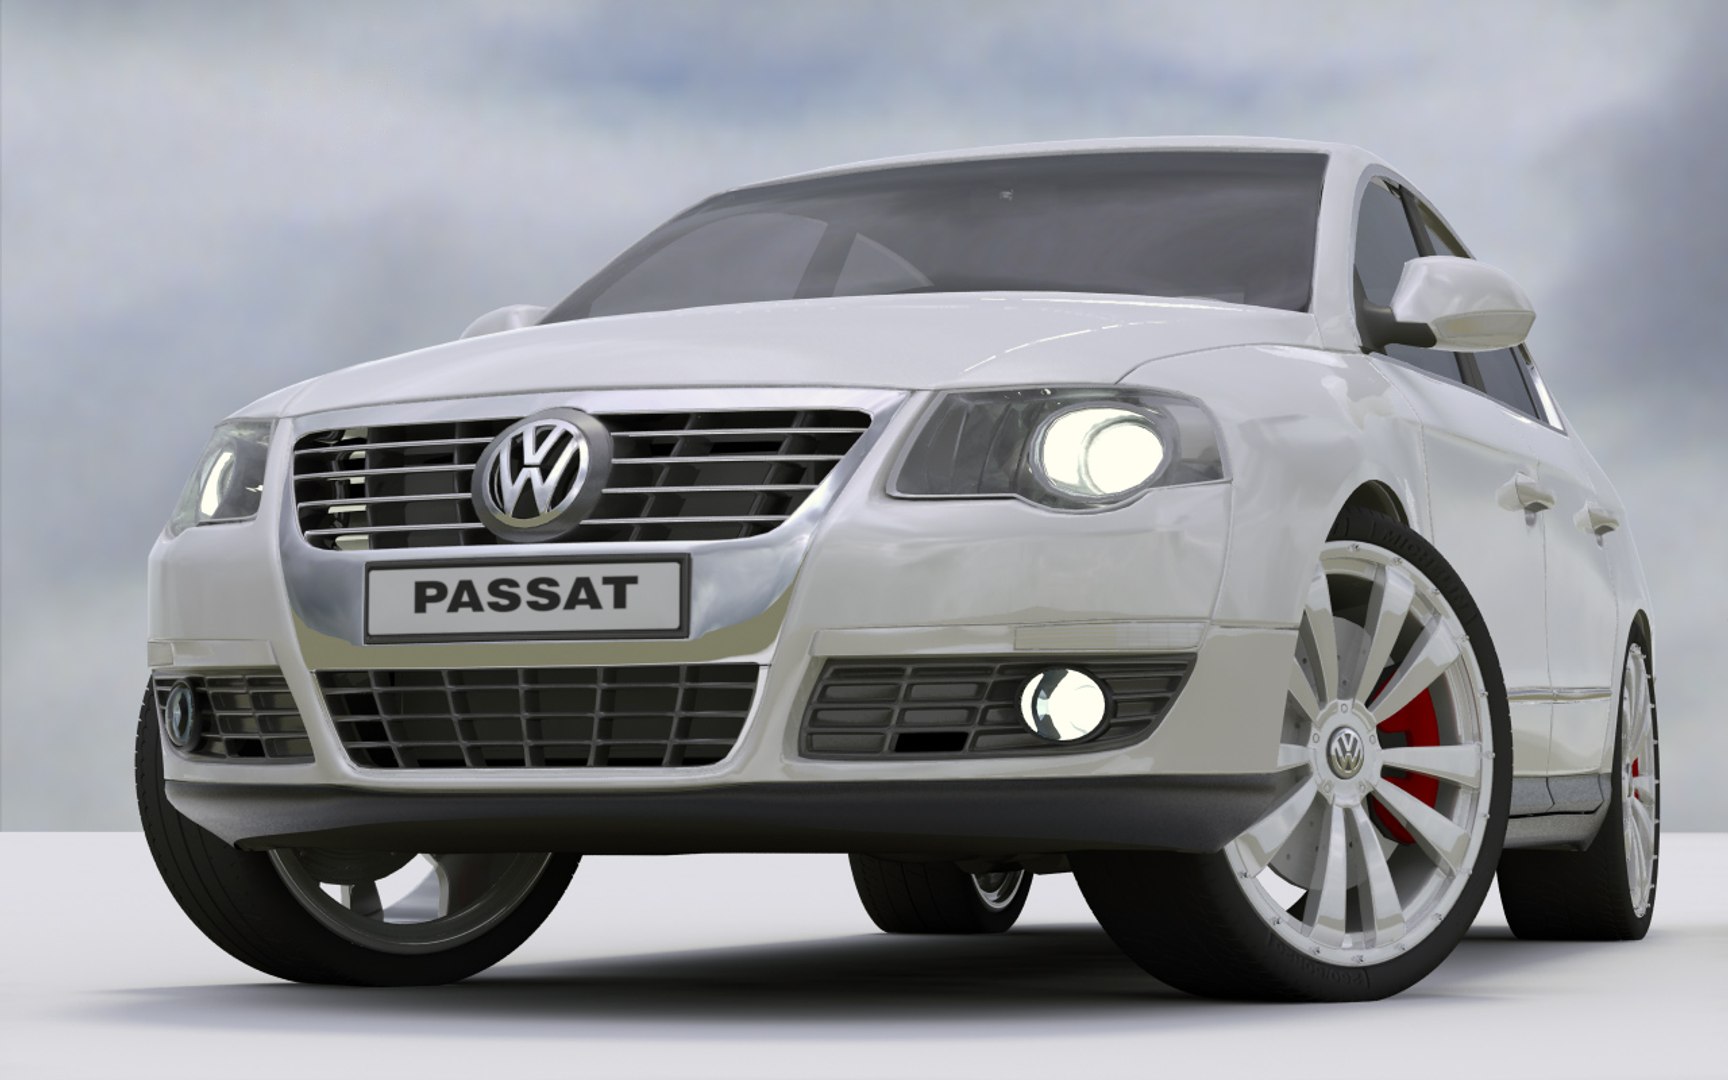 Volkswagen Passat B5 - Wikidata